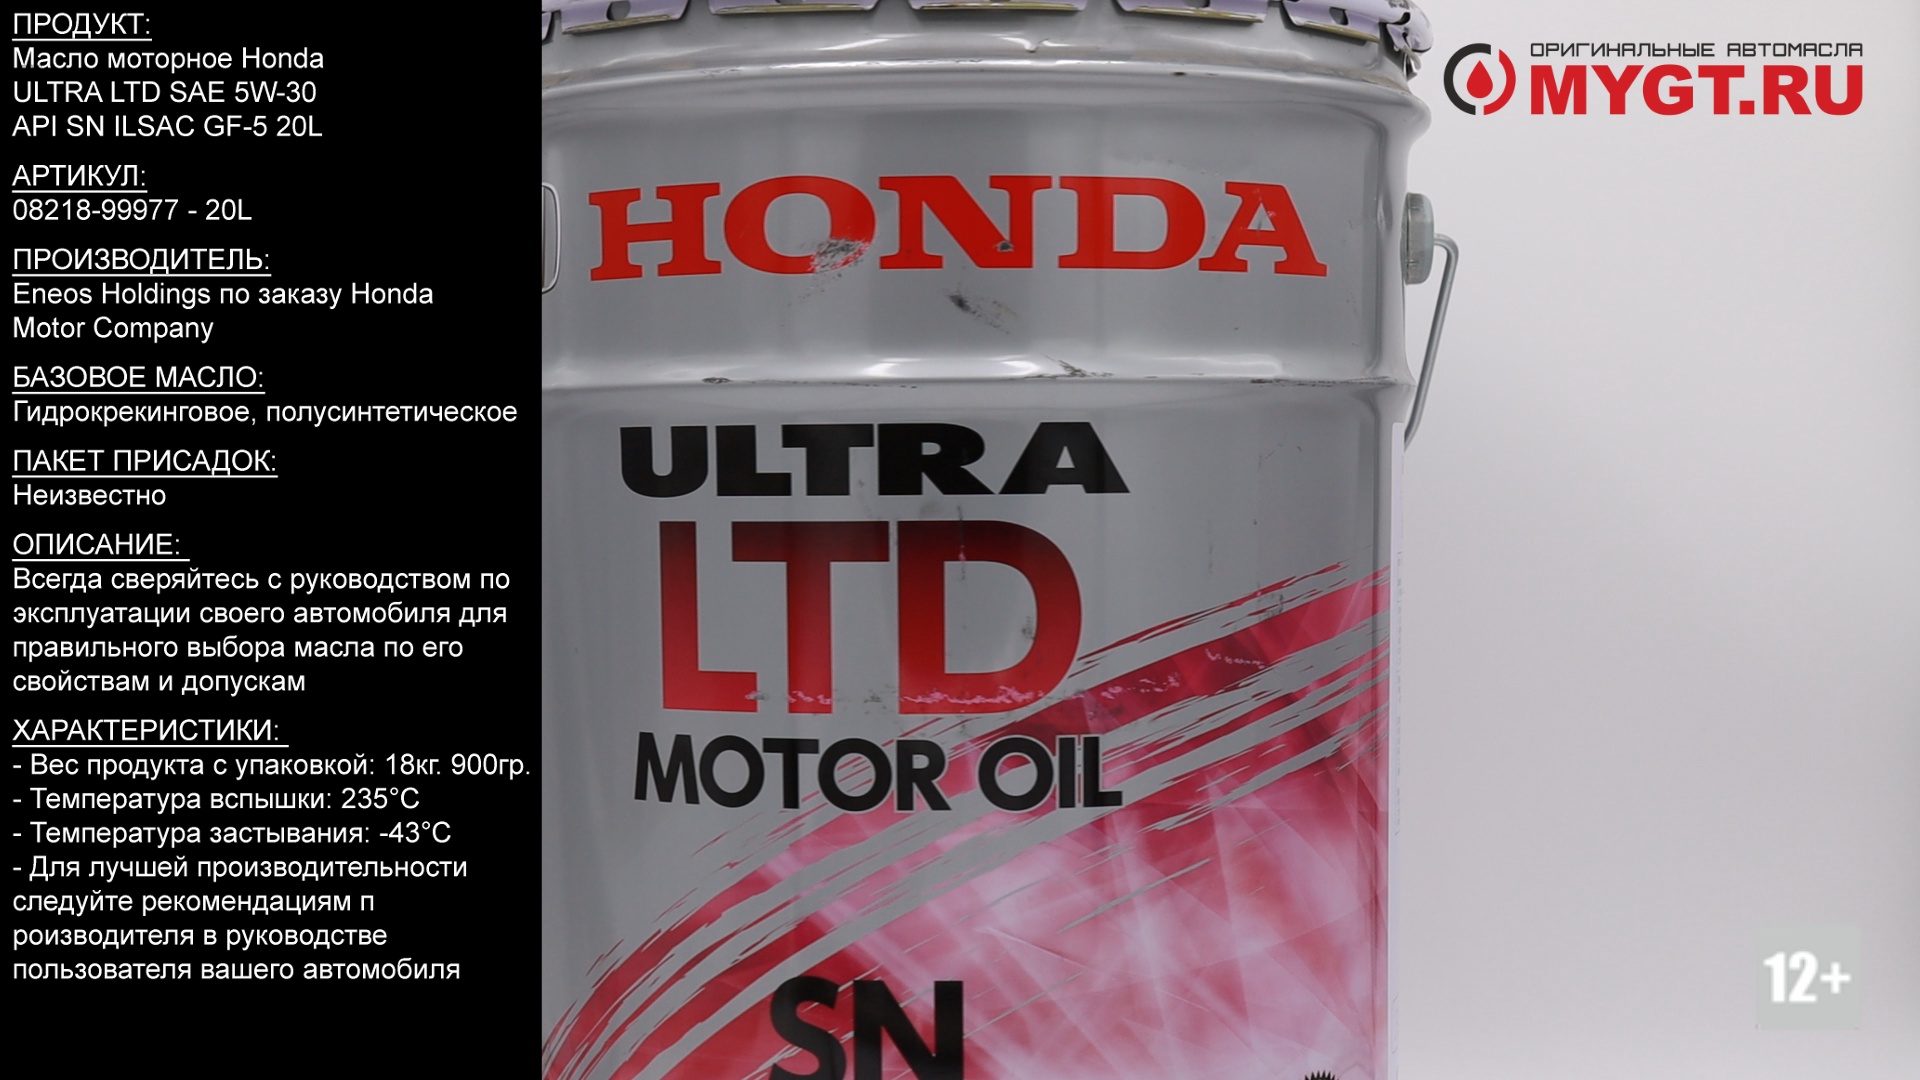 Honda Ultra Ltd 5w30 SN. Honda Ultra Leo Motor Oil SN 5w-30 ILSAC gf-5. Honda Ultra Ltd SM 5w-30. Honda Ultra Ltd SAE 5w-30. Ilsac gf 5 5w 30 масло